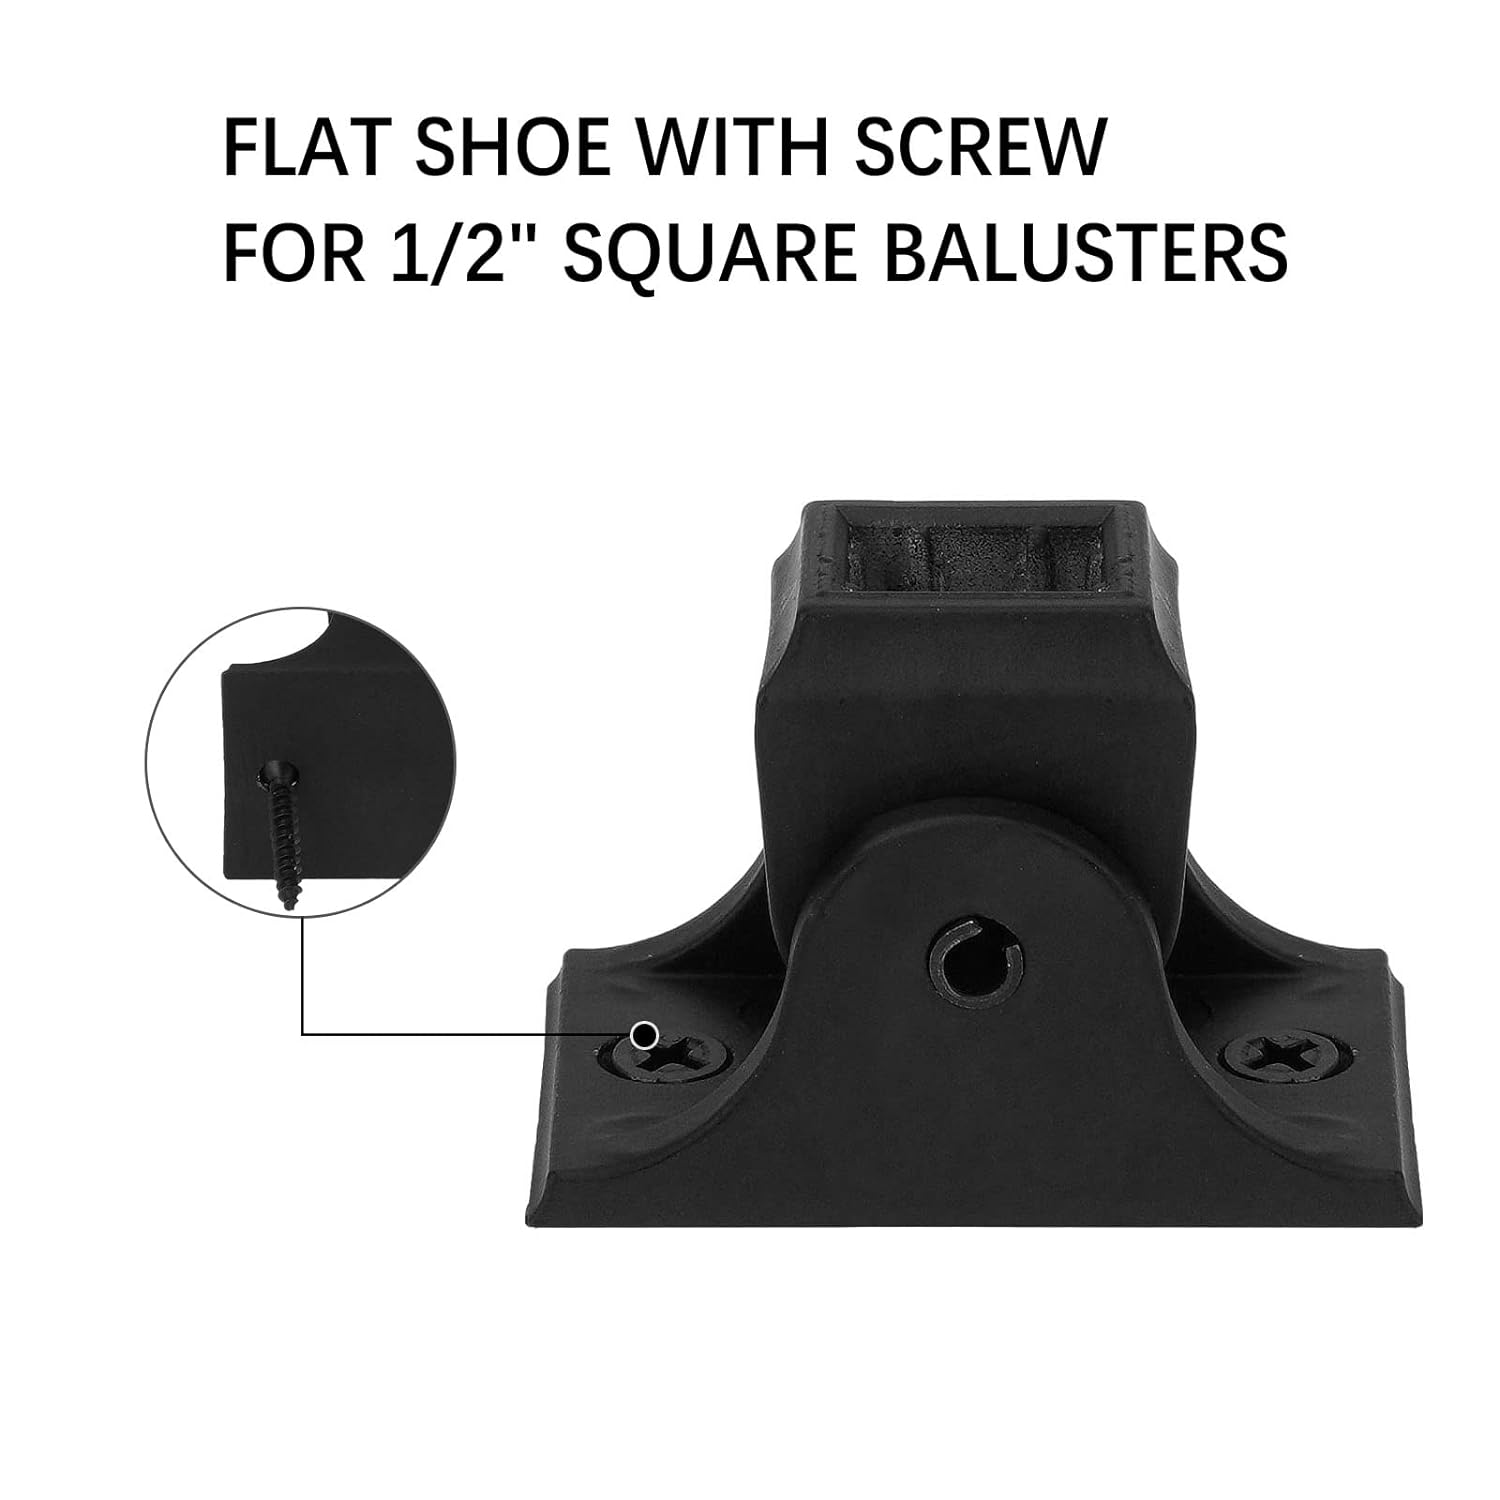 Generic Sidasu Iron Baluster Swivel Shoes Baluster Shoes with Screw Iron Baluster Shoes Angle for 1/2" Square Iron Balusters 10 Pa